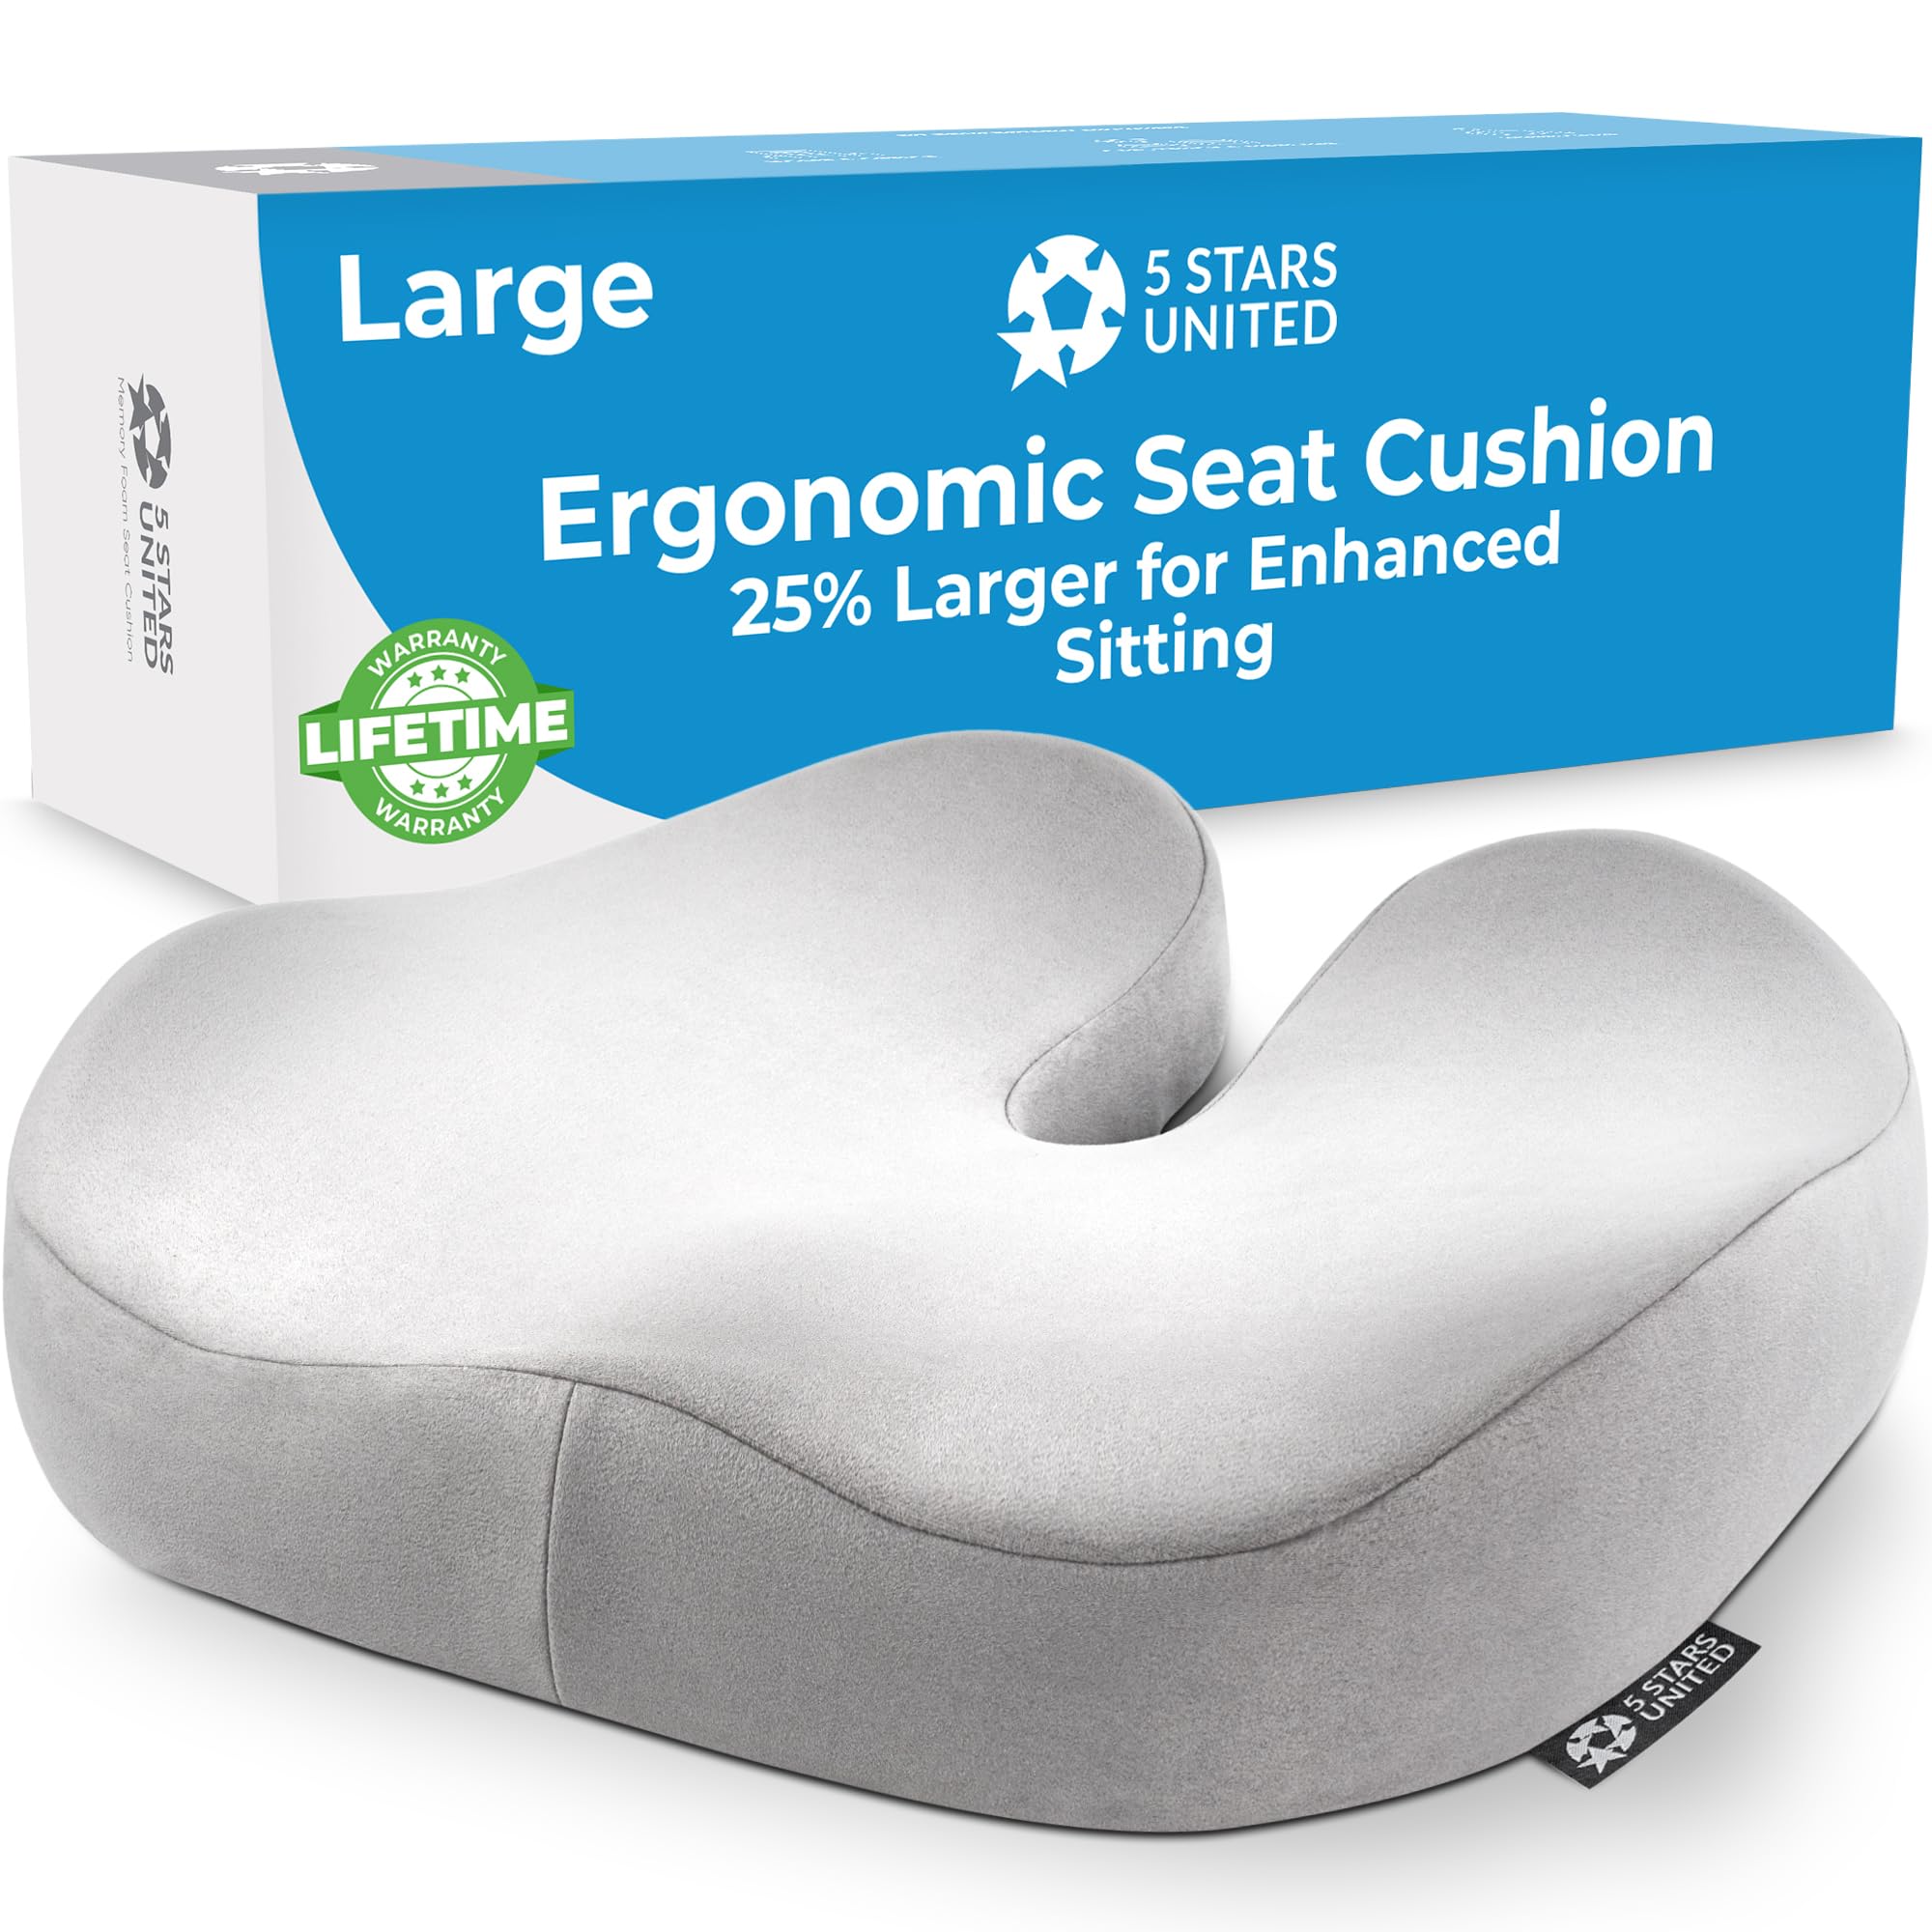 Pressure Relief Seat Cushion